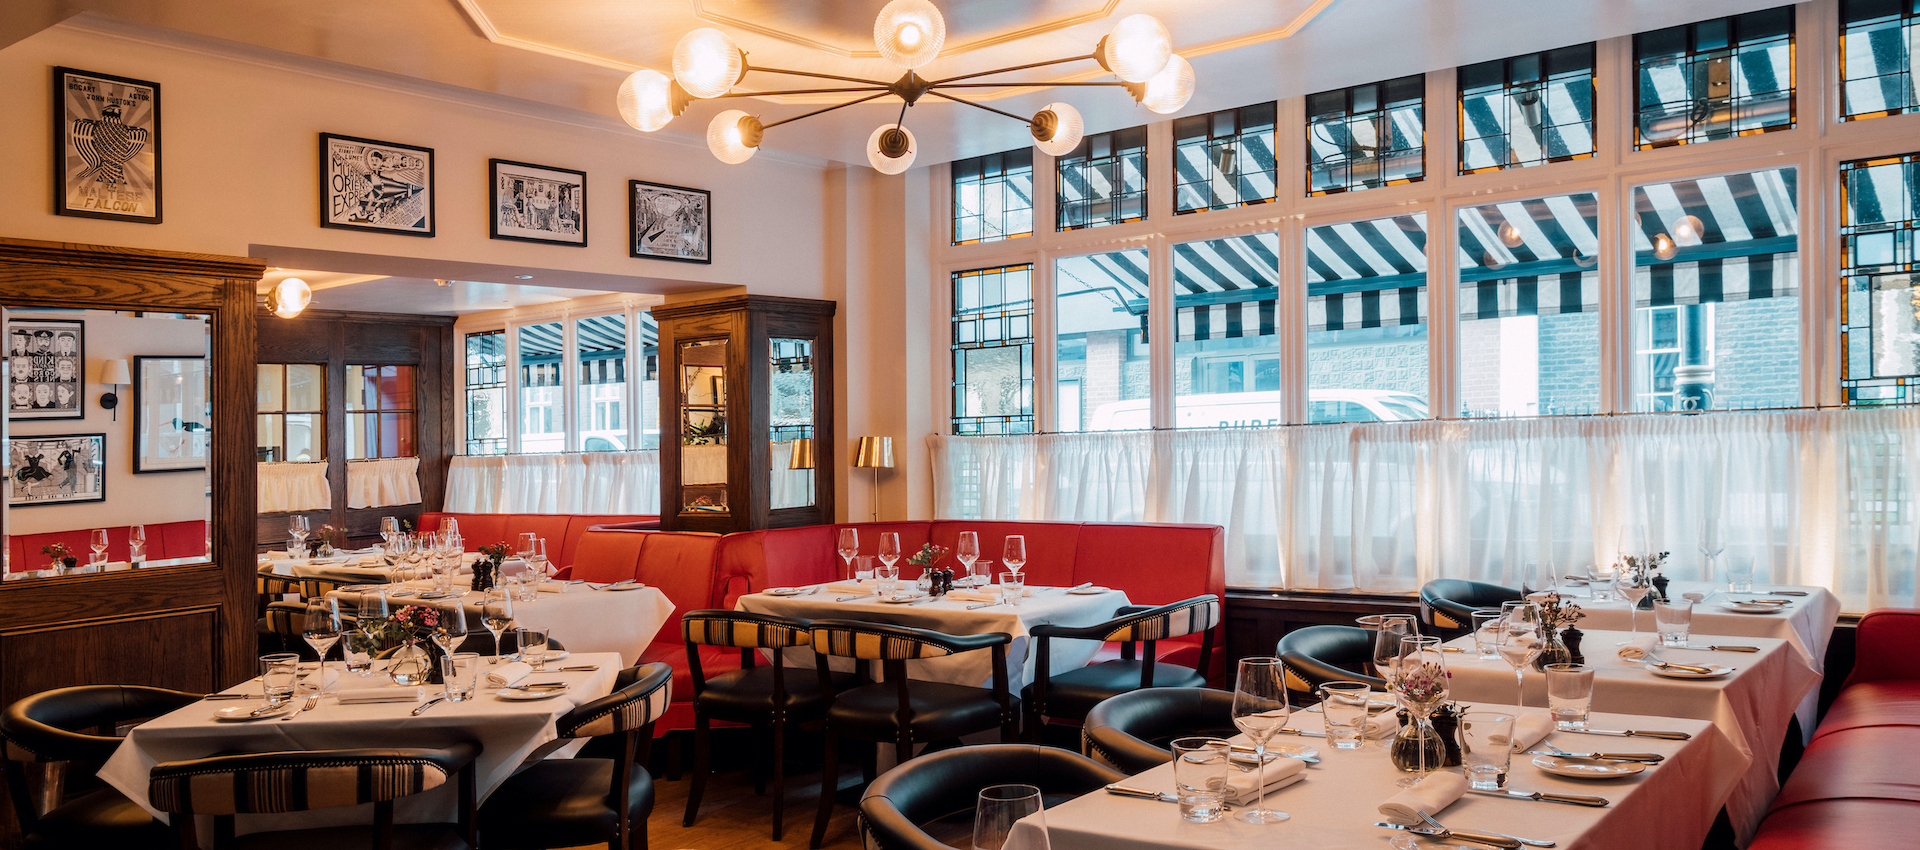 Review: Quo Vadis restaurant in Soho